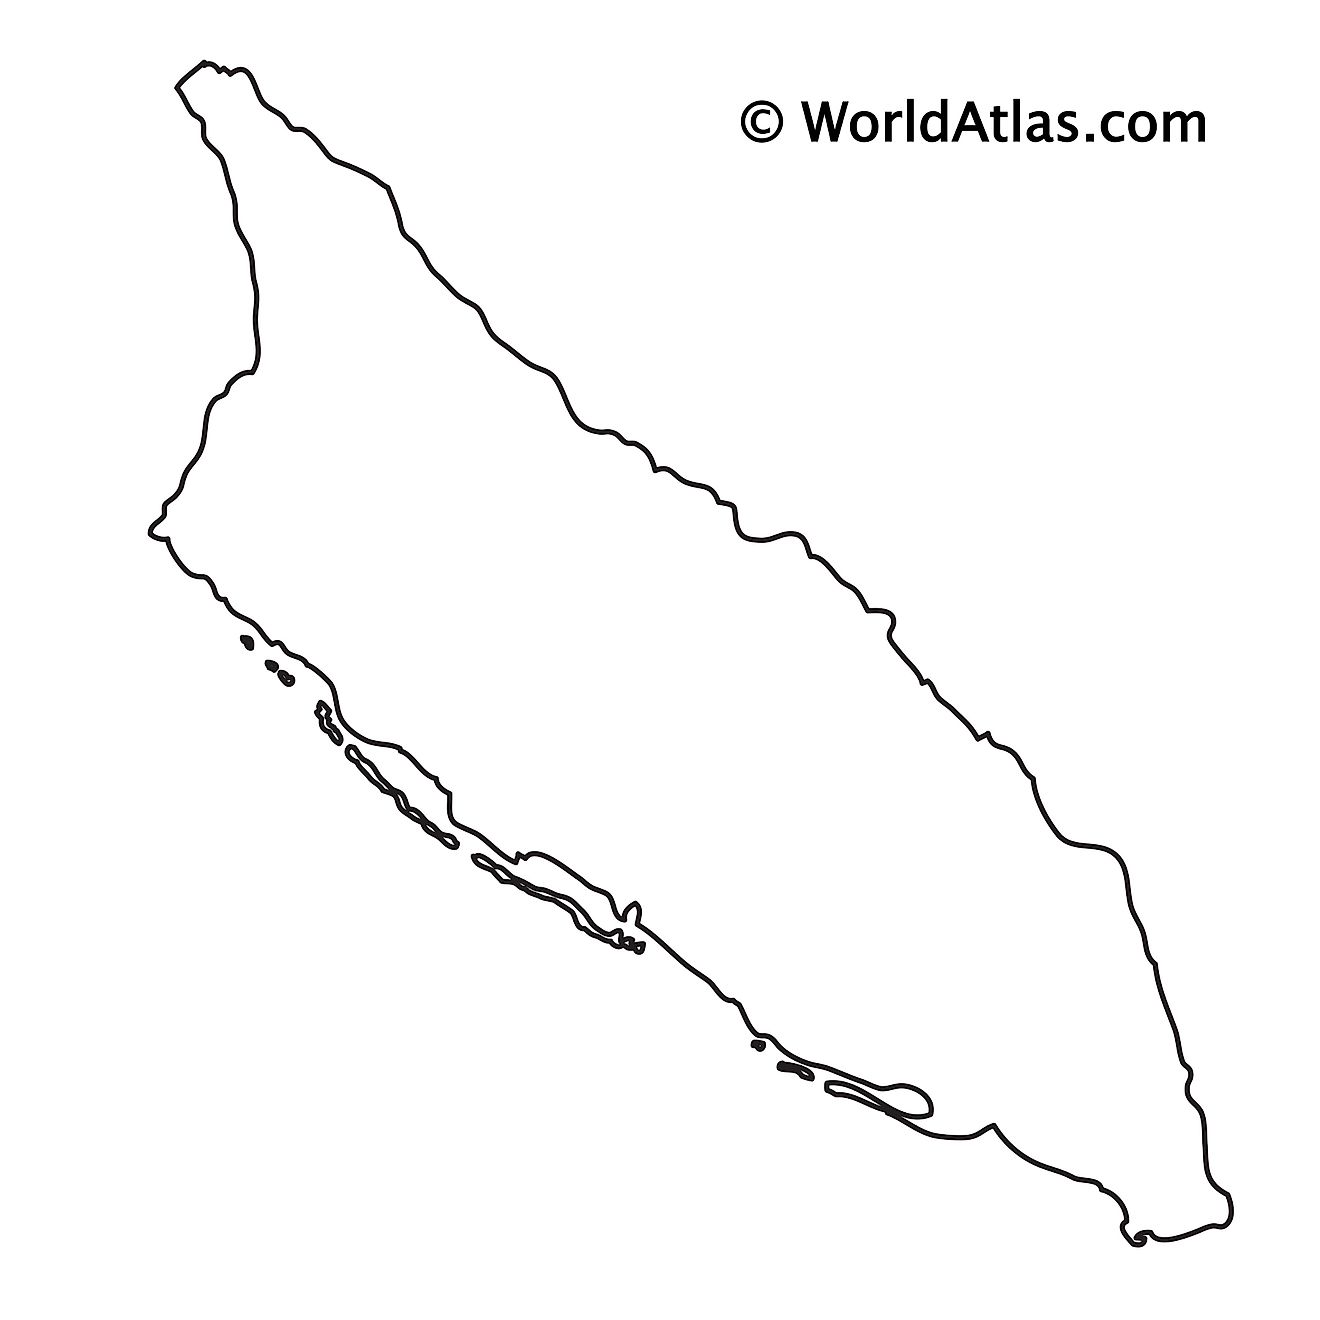 Blank outline map of Aruba